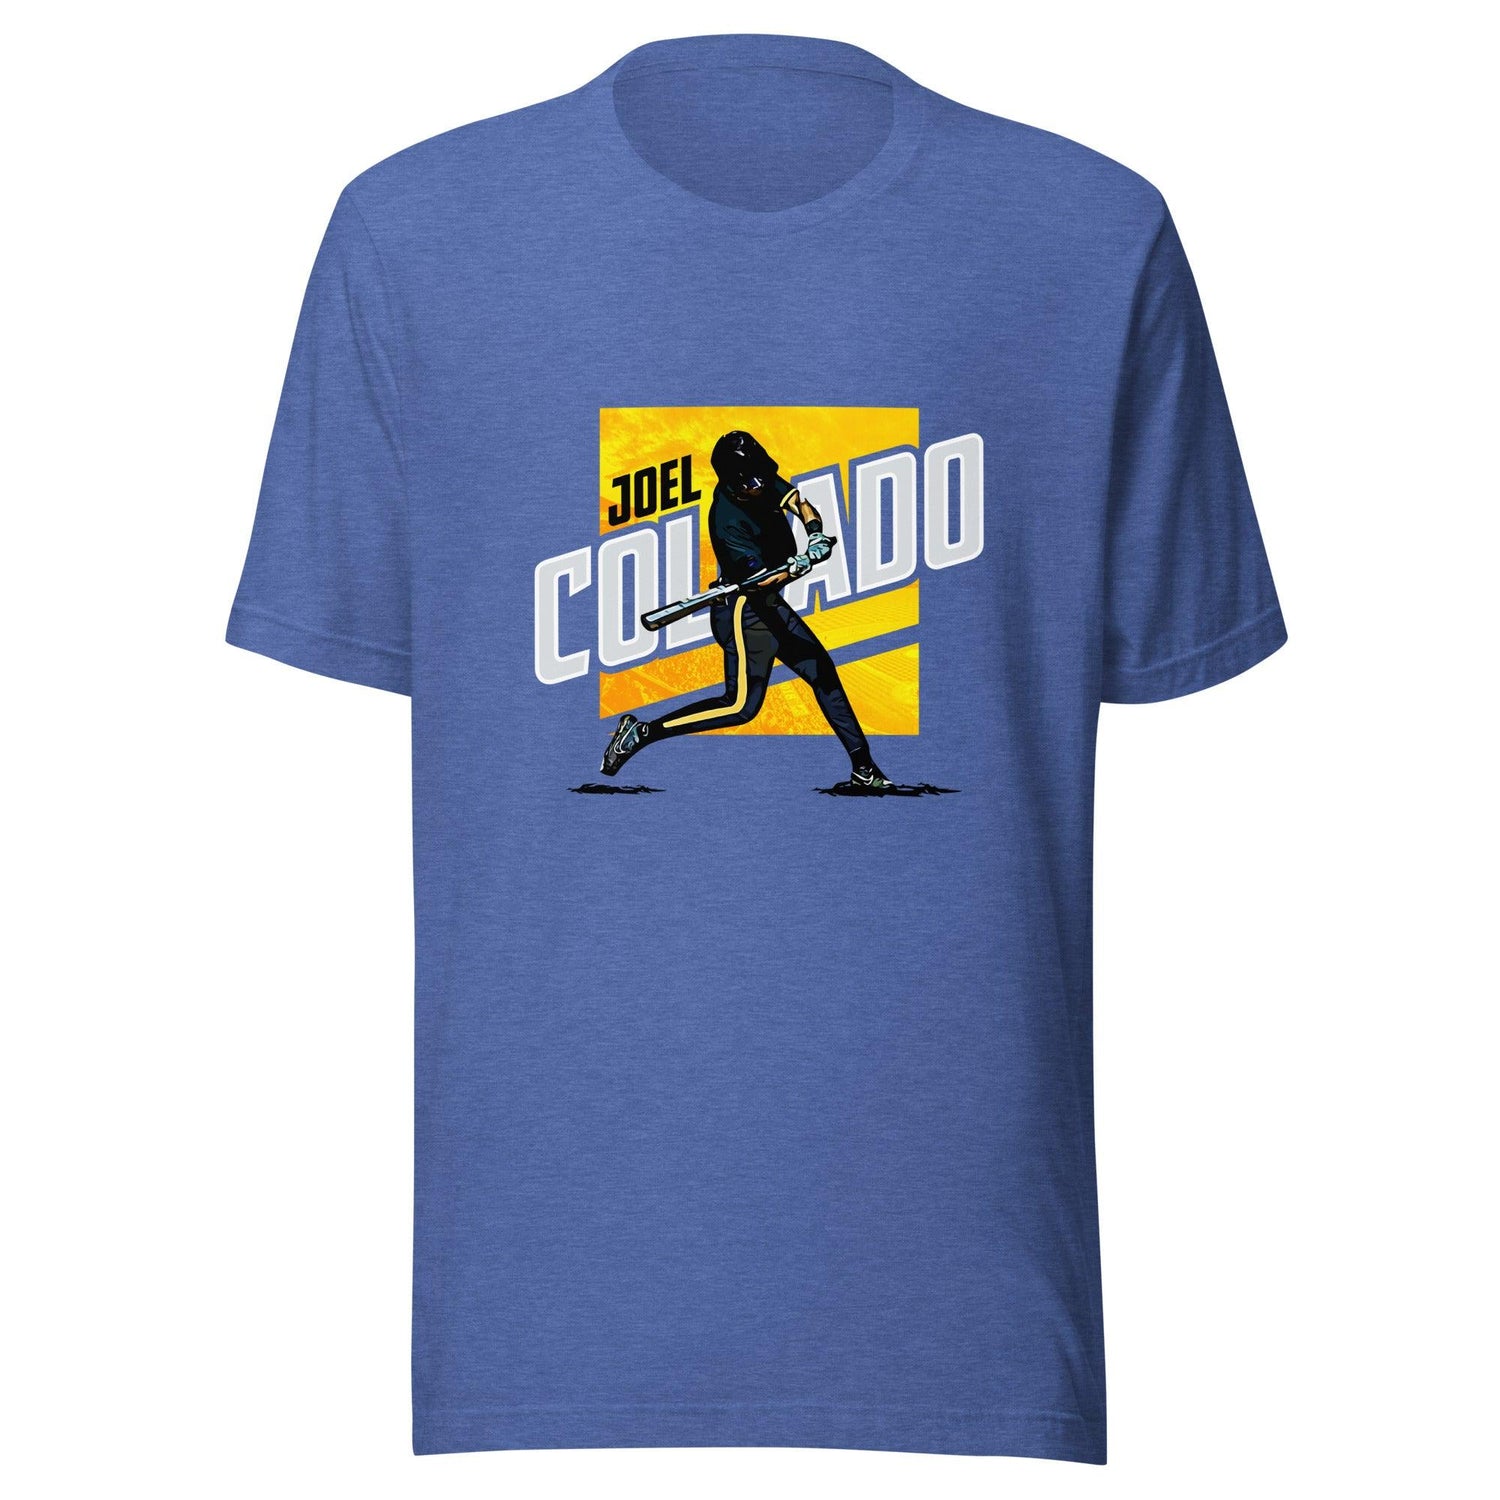 Joel Collado "Gameday" t-shirt - Fan Arch